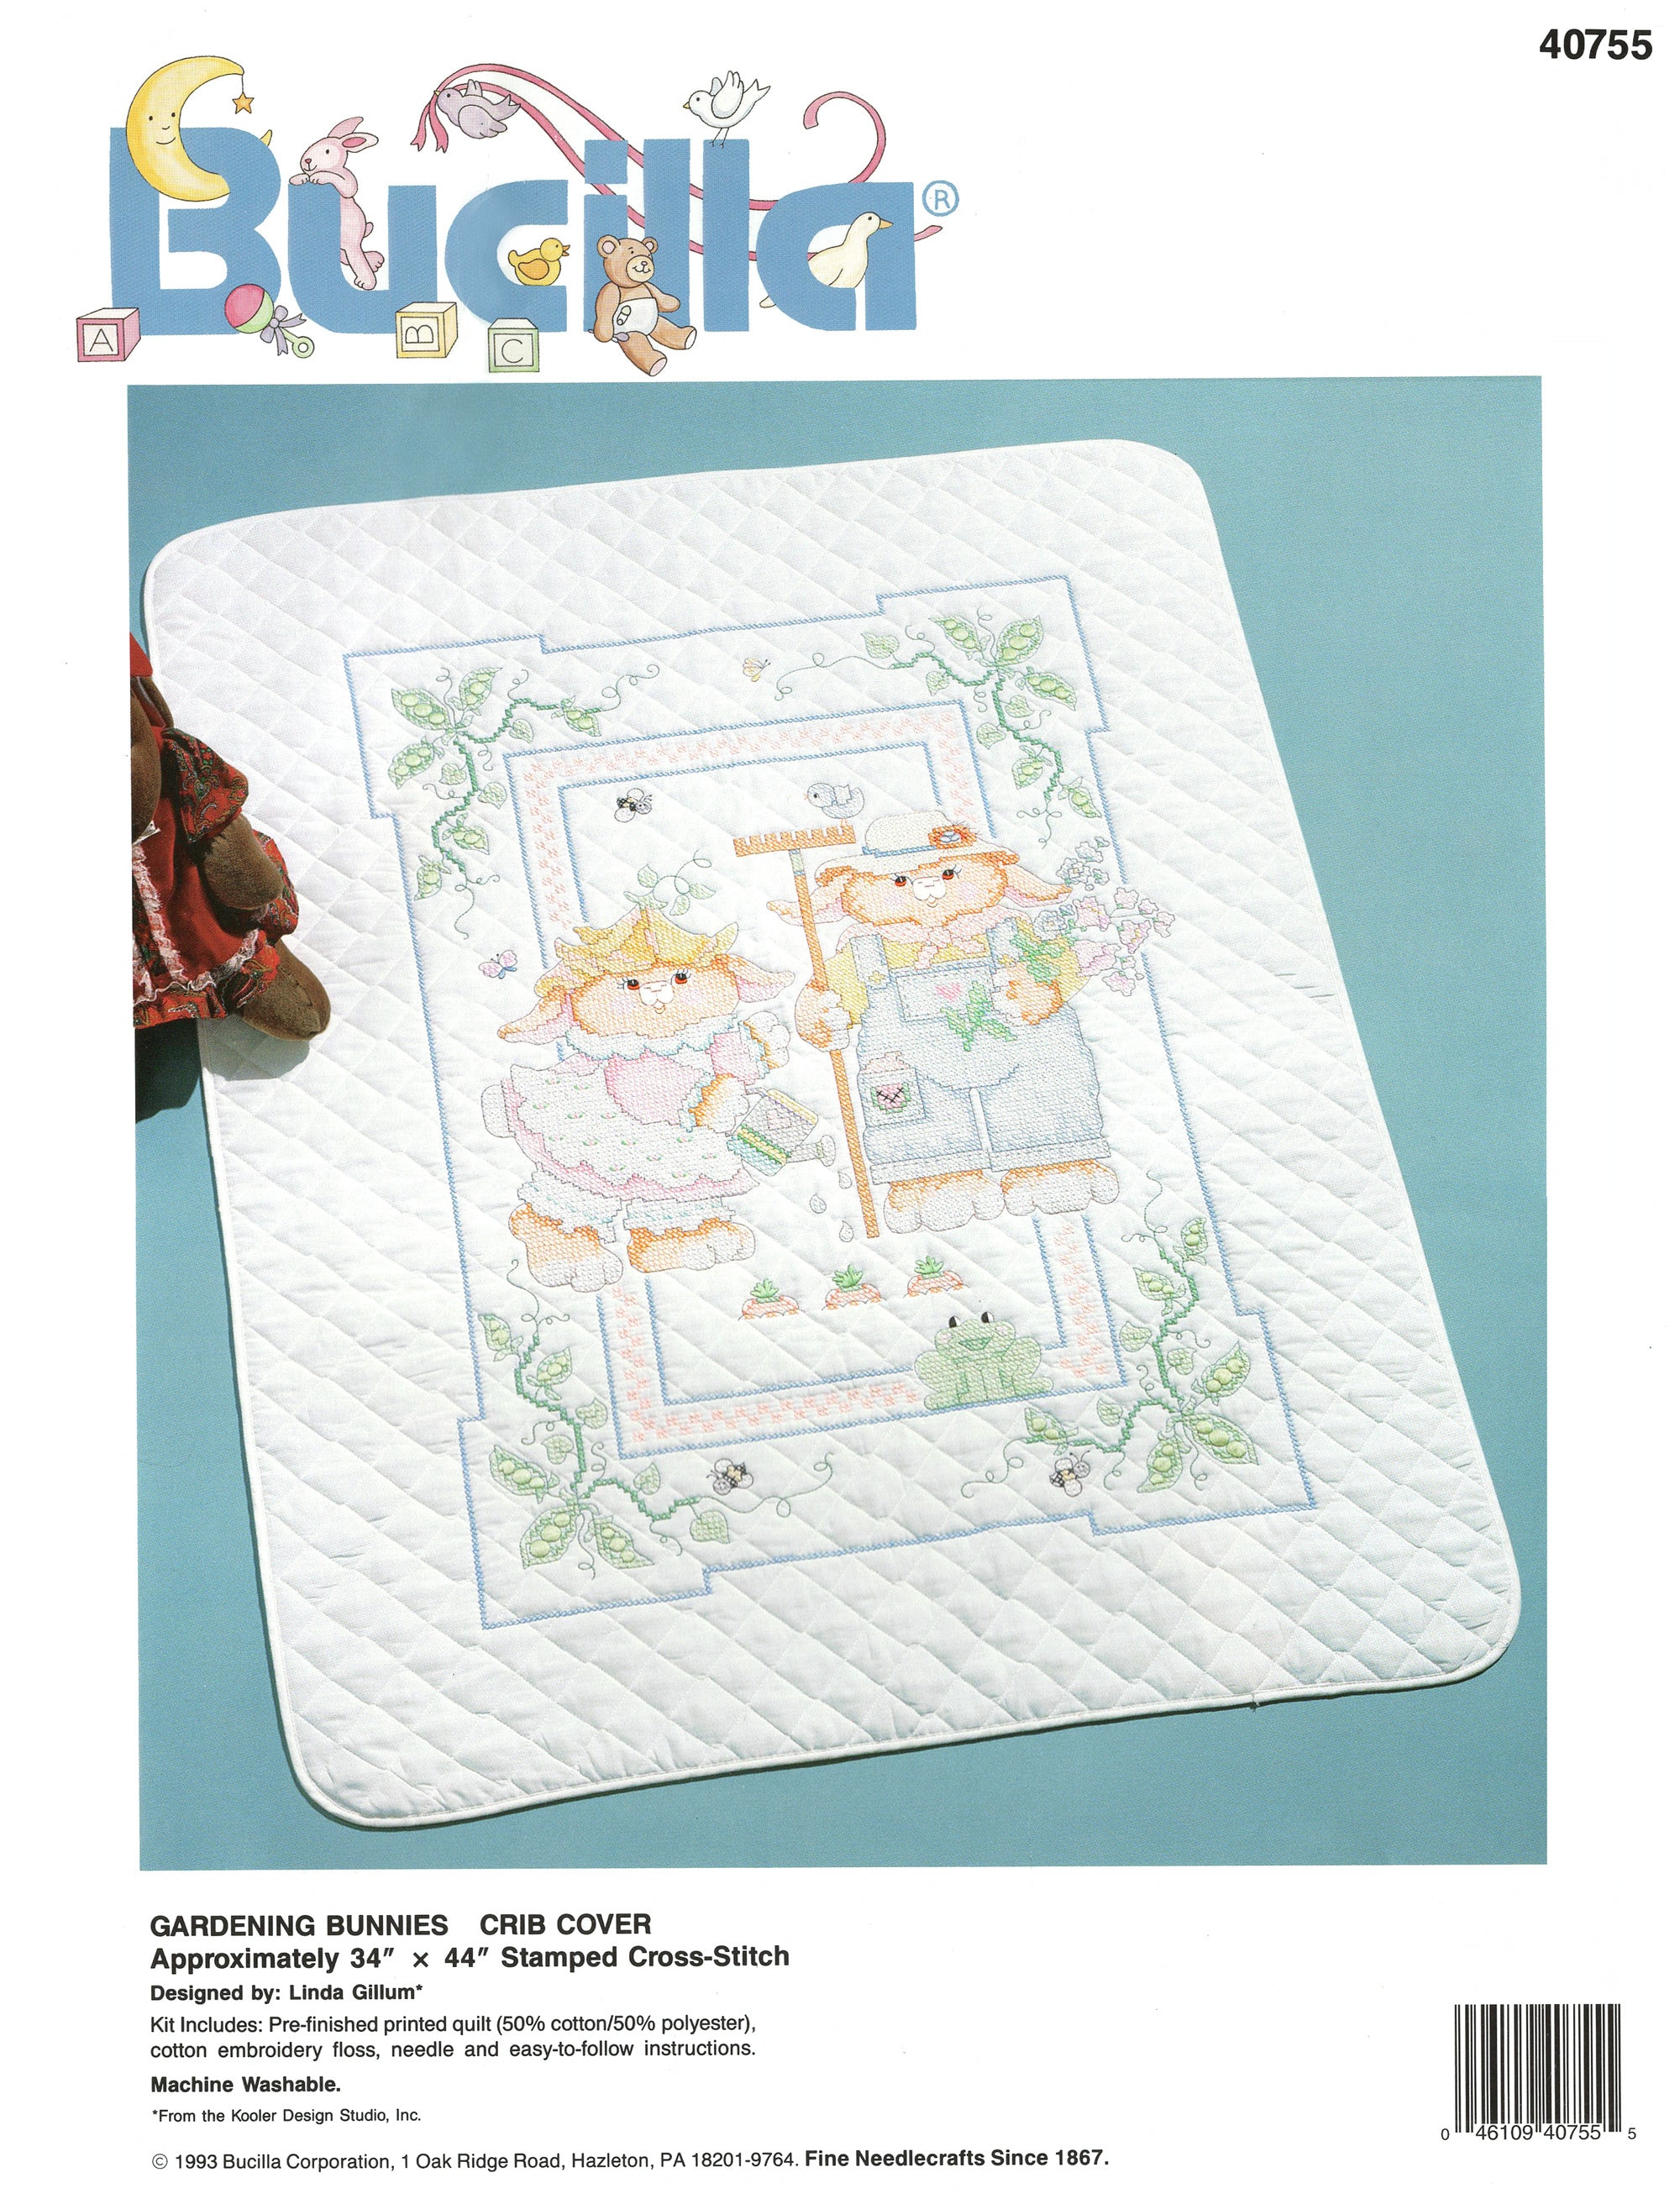 Bucilla gardening Bunnies Stamped Cross Stitch Crib Cover Kit